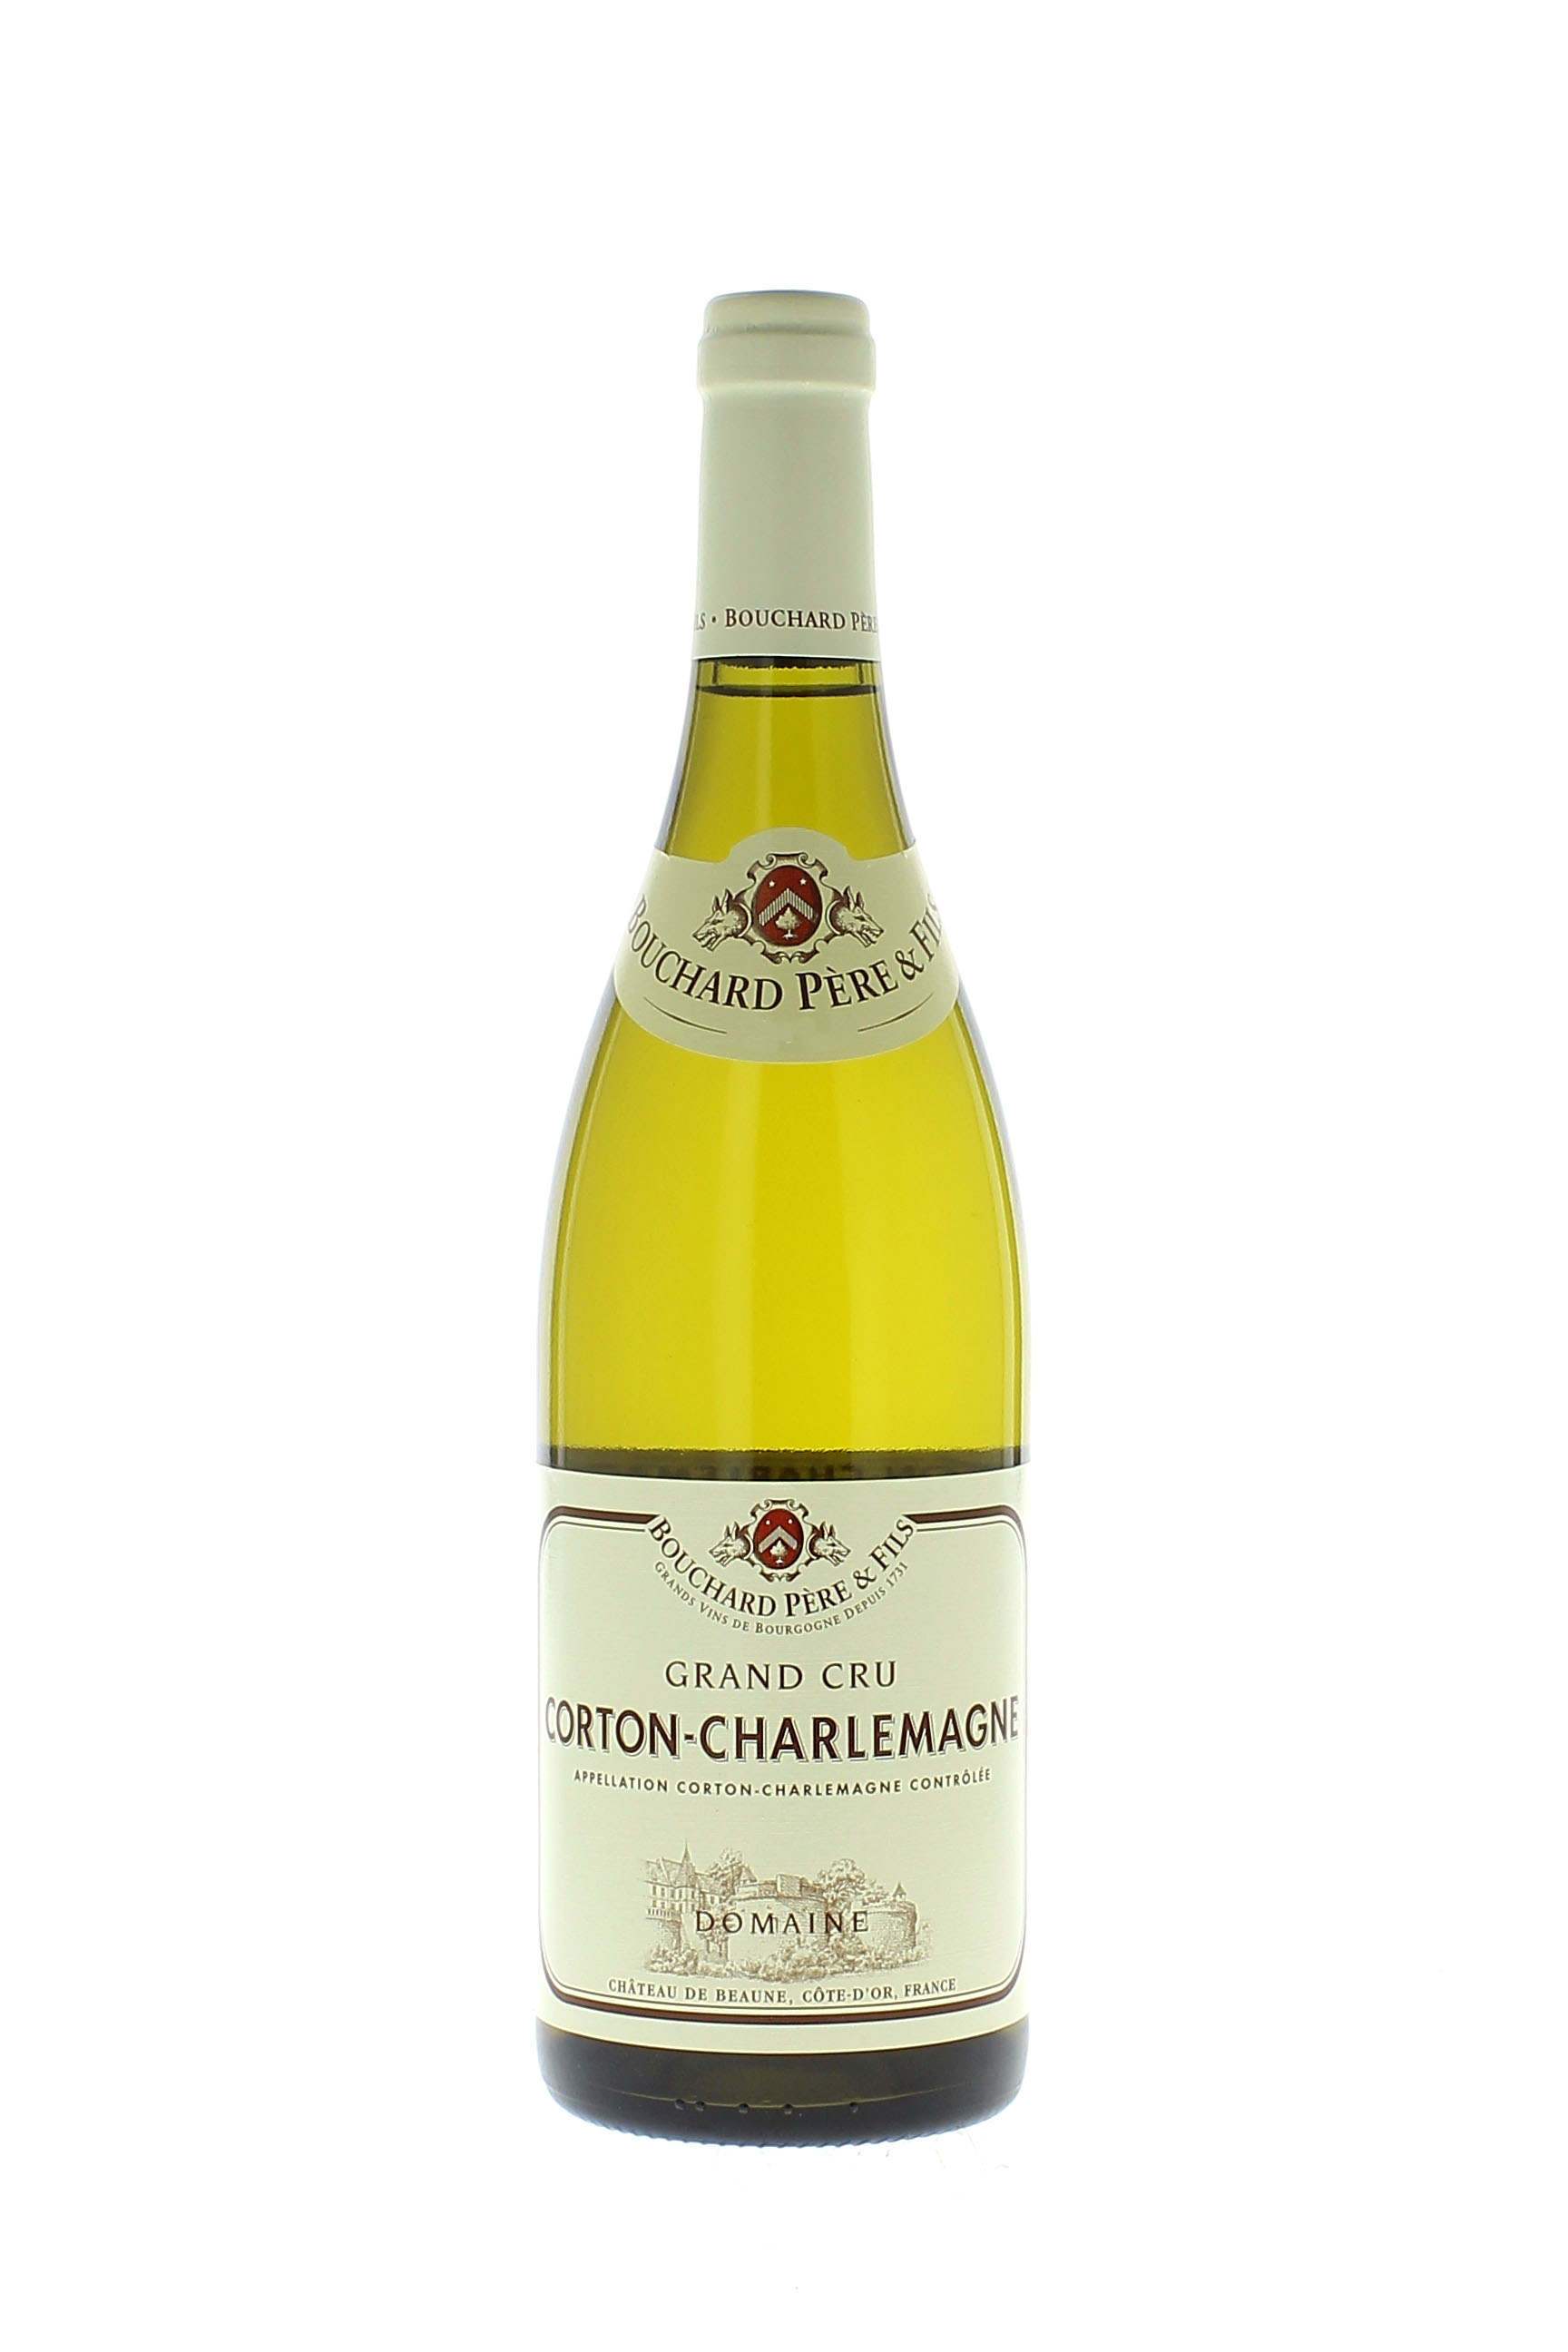 Corton charlemagne 2003  BOUCHARD Pre et fils, Bourgogne blanc